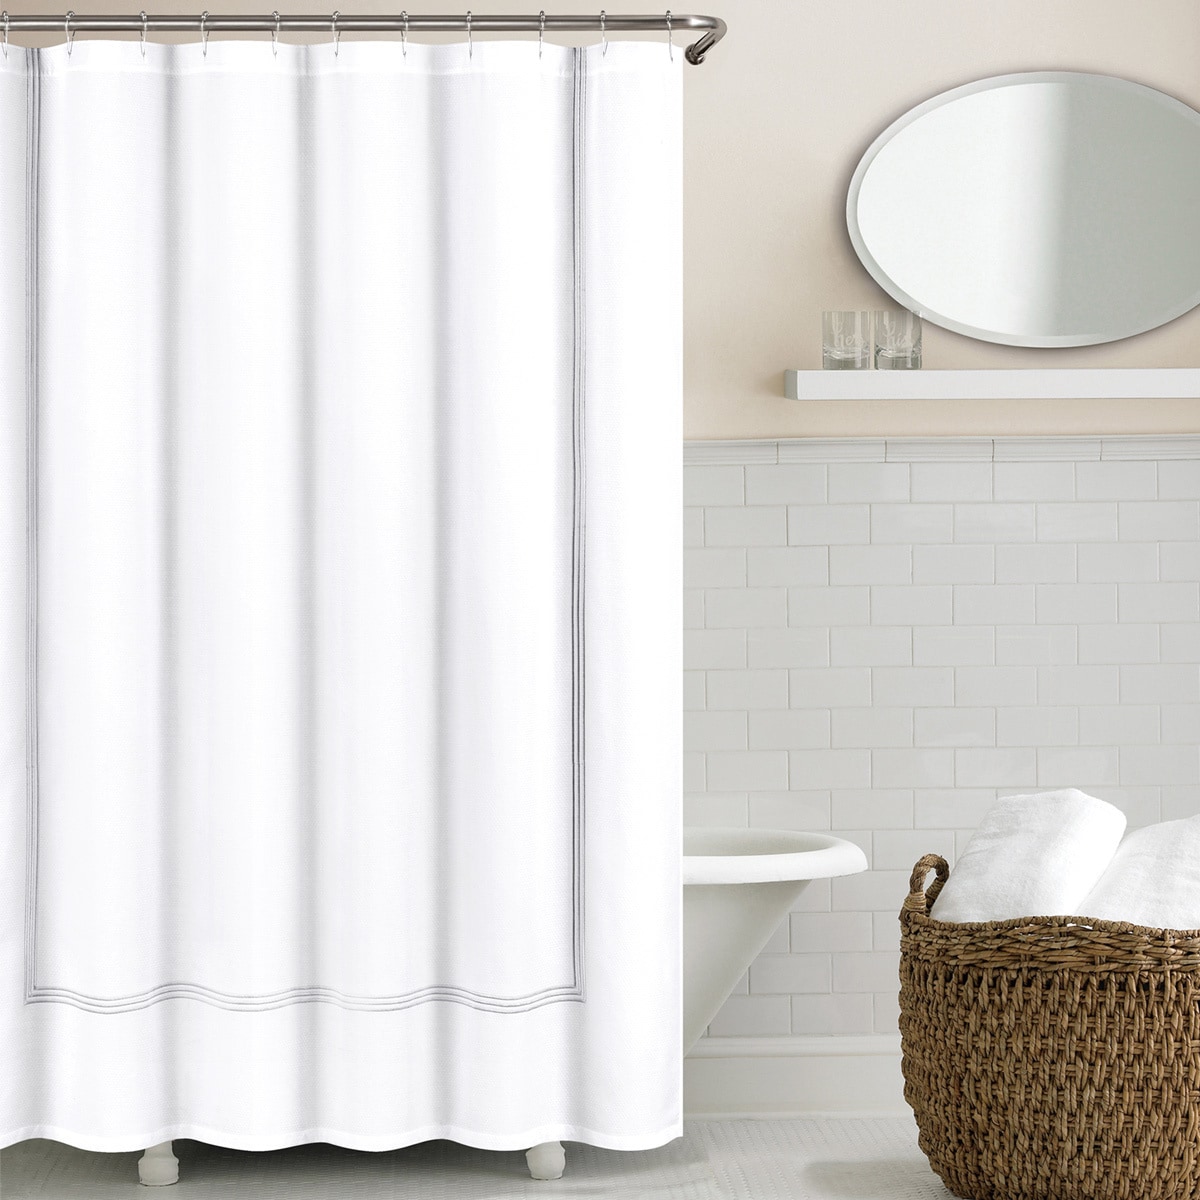 Sweet Jojo Designs Hotel Shower Curtain, White/Black, 72 L x 72 W